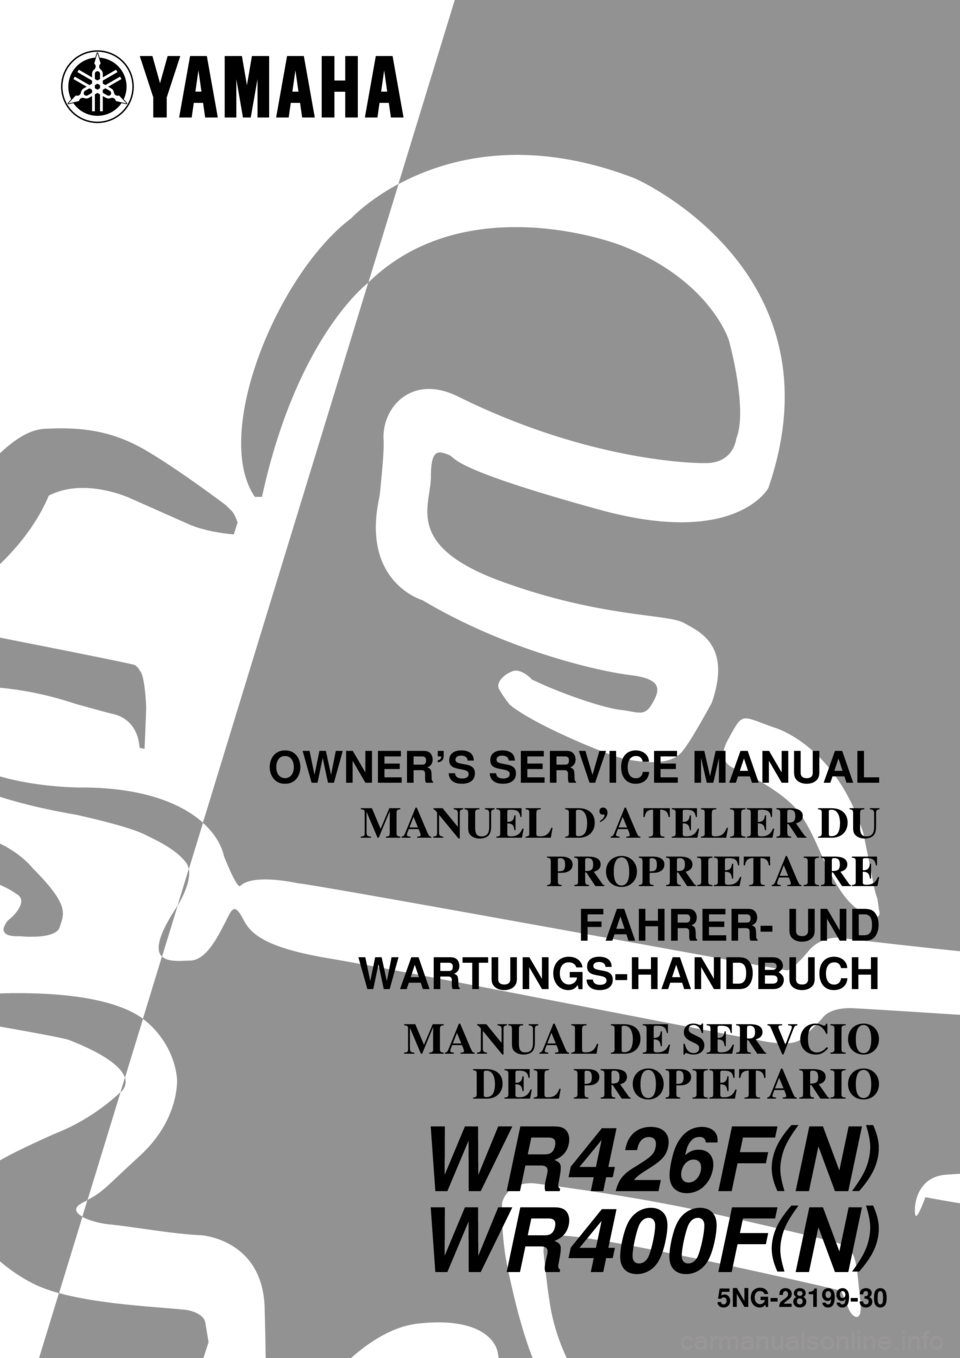 YAMAHA WR 400F 2001  Manuale duso (in Italian)      
 
 
 
5NG-28199-30
WR426F(N)
WR400F(N)
OWNER’S SERVICE MANUAL
MANUEL D’ATELIER DU
PROPRIETAIRE
FAHRER- UND
WARTUNGS-HANDBUCH
MANUAL DE SERVCIO
DEL PROPIETARIO 